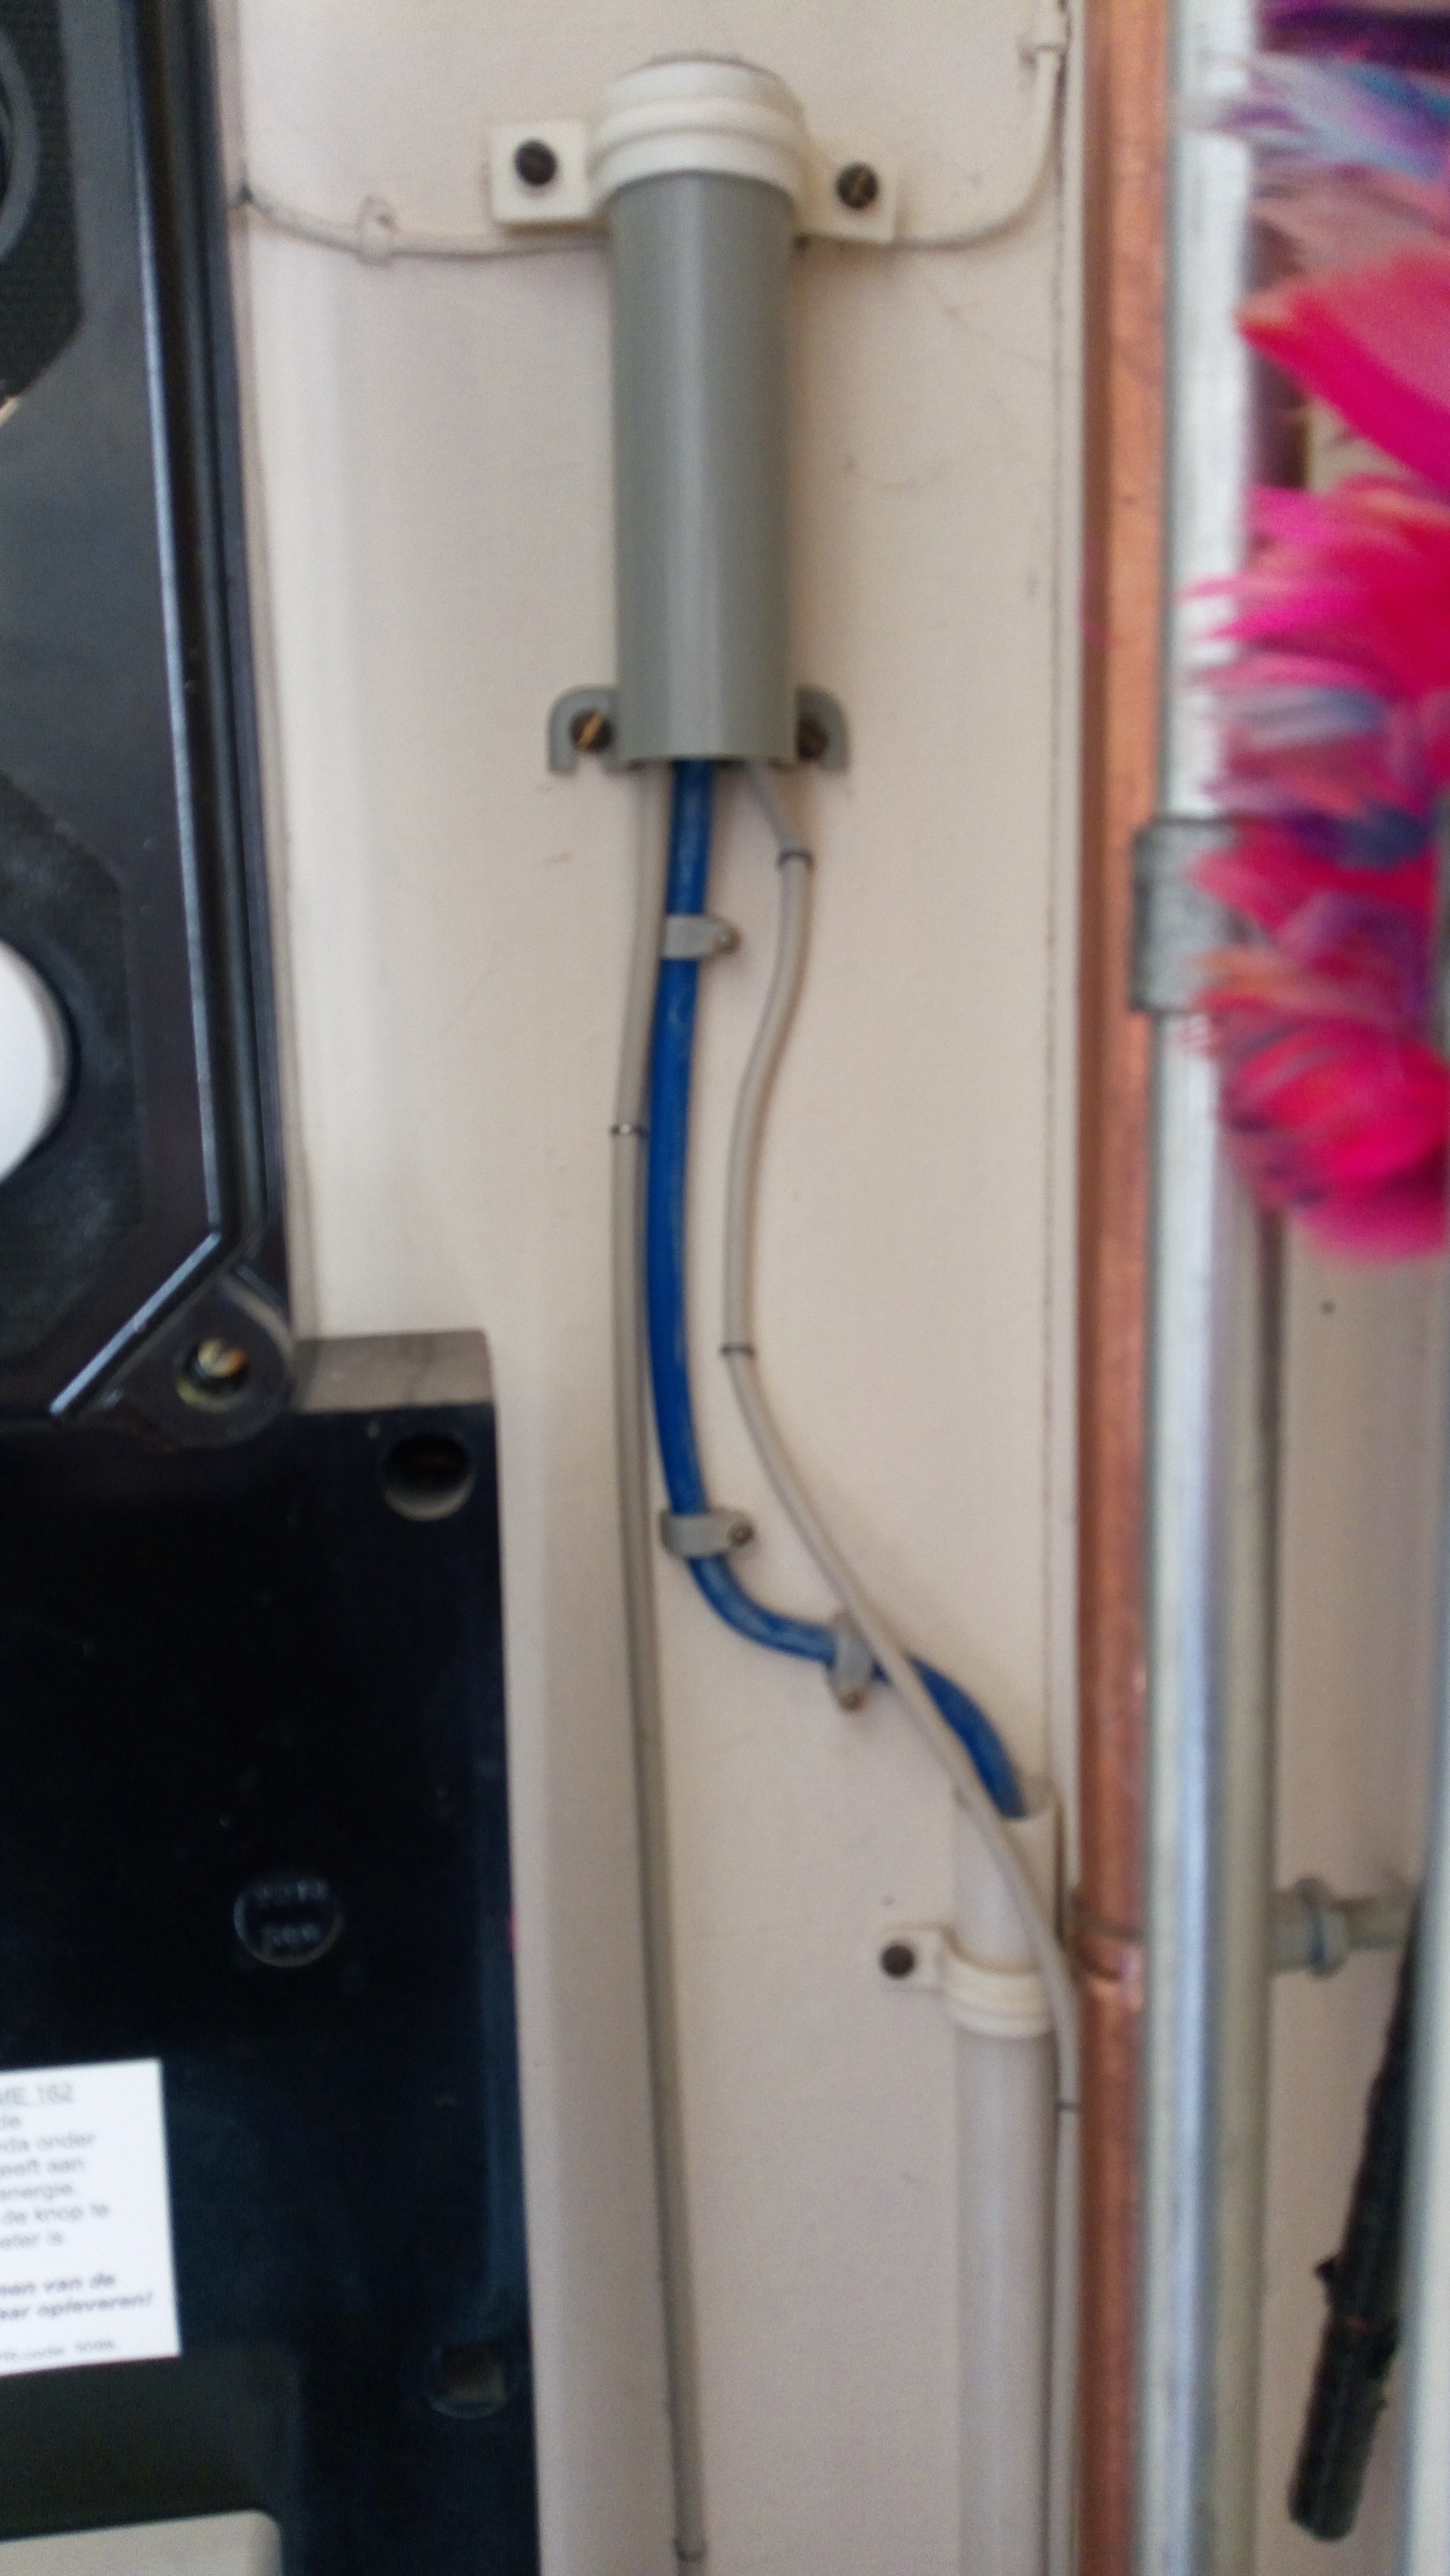 anker Samengesteld Converteren Blauwe kabel in mijn meterkast | KPN Community